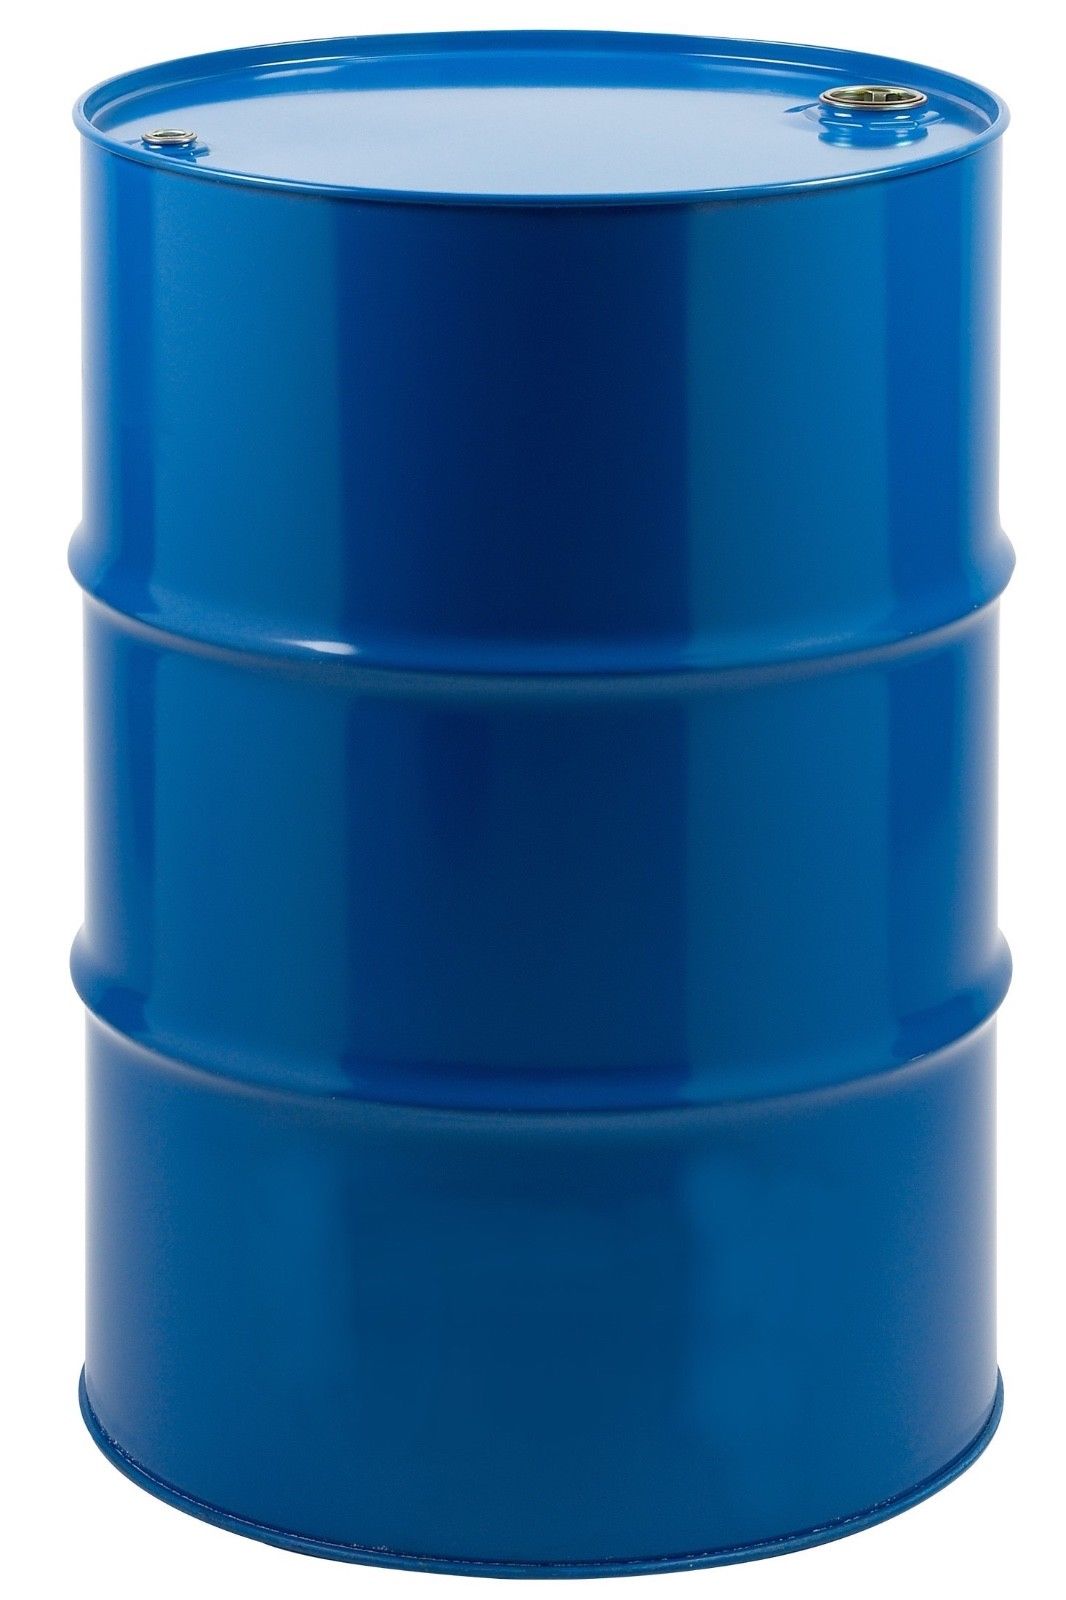 Масло 216.5 л. YMIOIL гидравлические масла 200л. Масло ИГП-18 бочка. Бочка синяя металлическая. Синие металлические бочки.